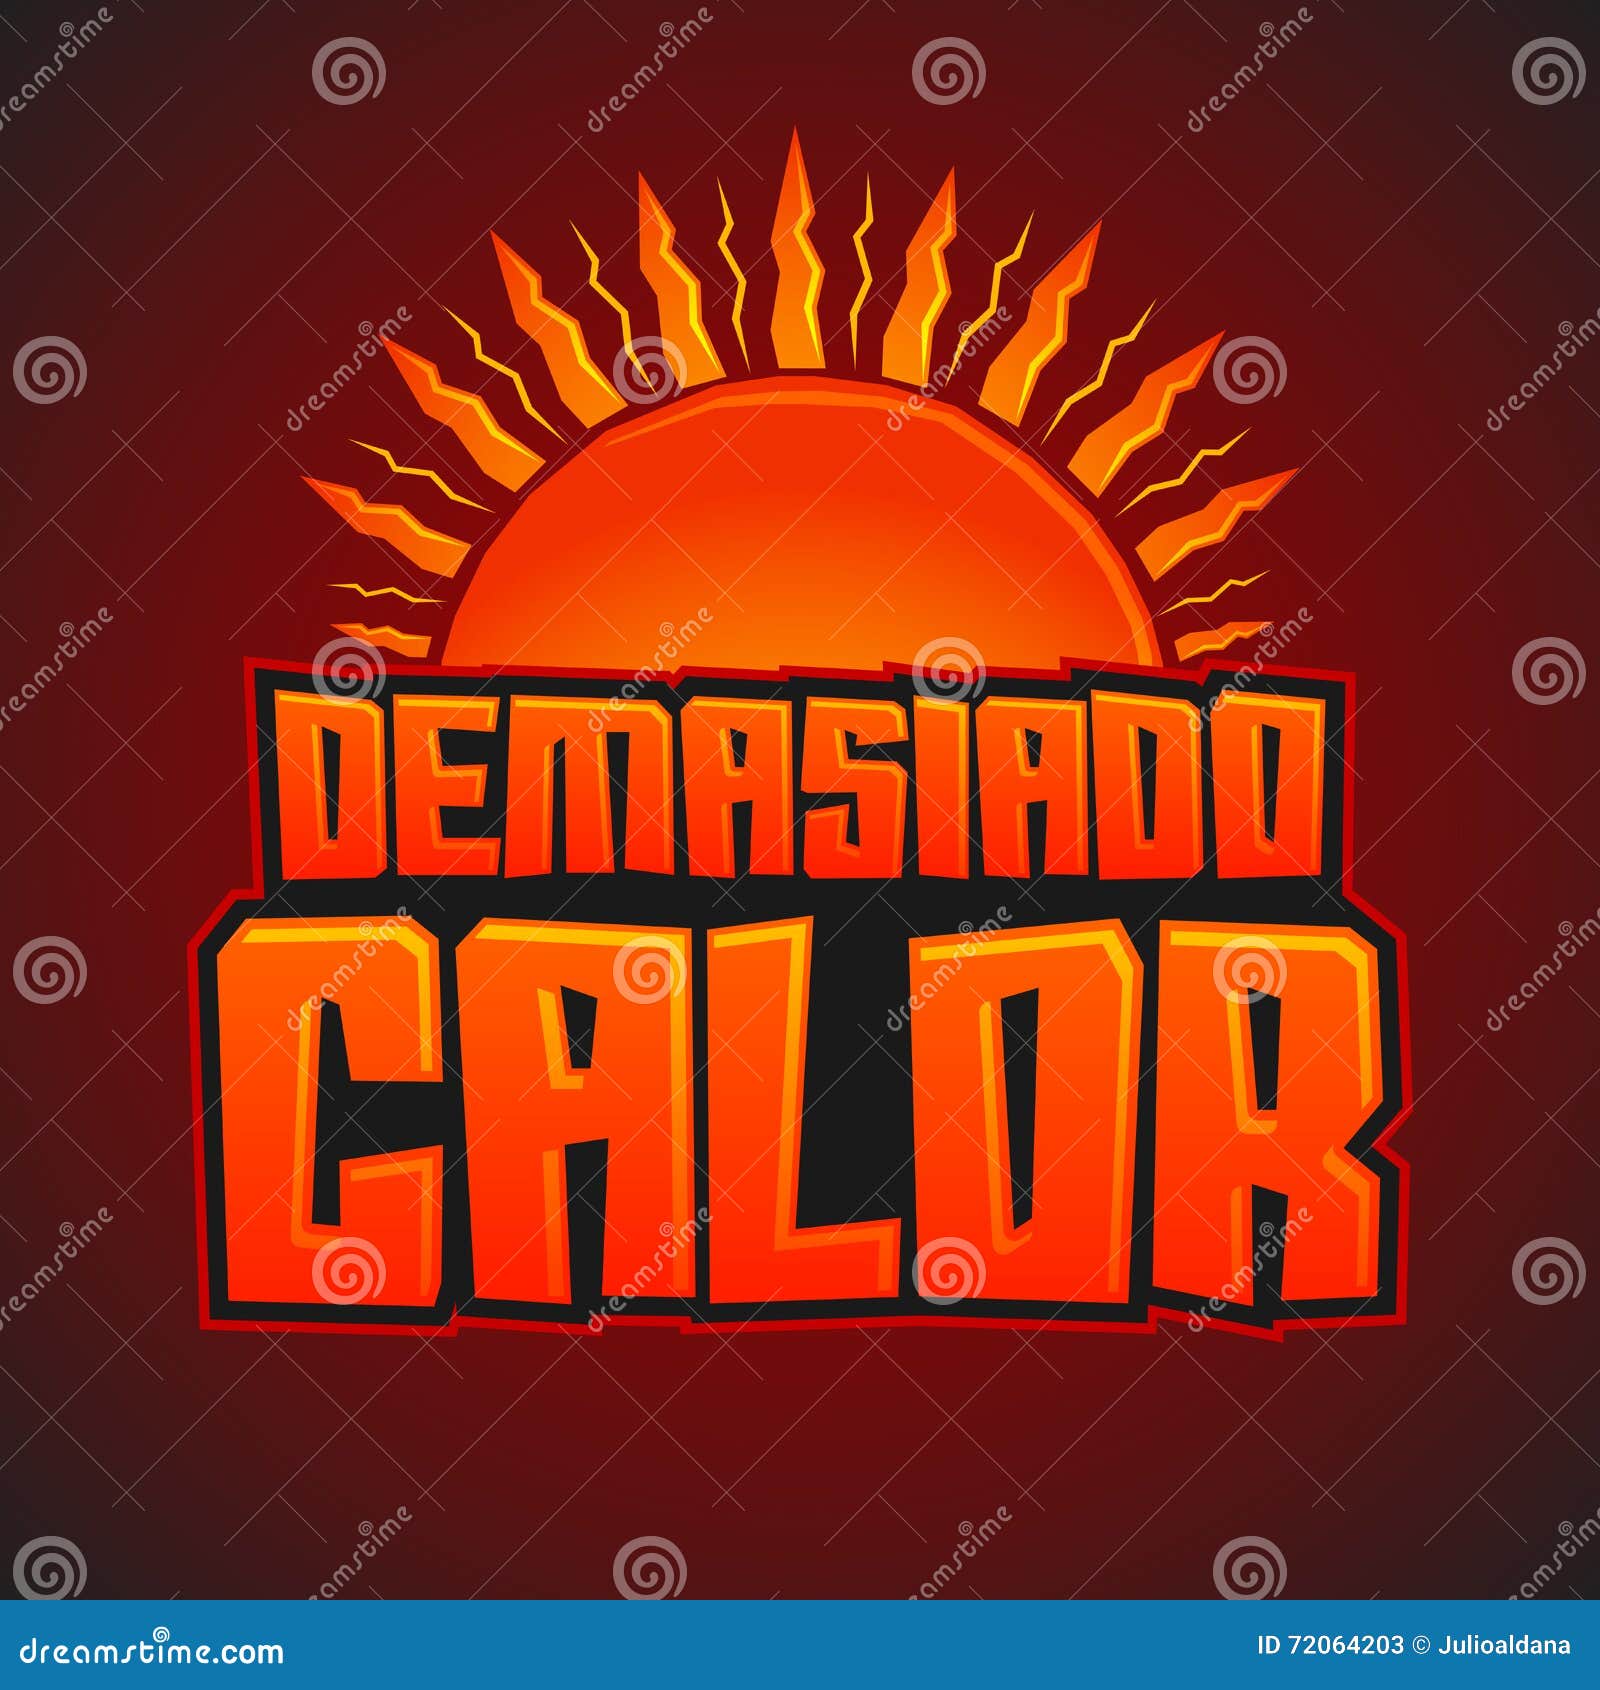 demasiado calor - too much heat spanish text